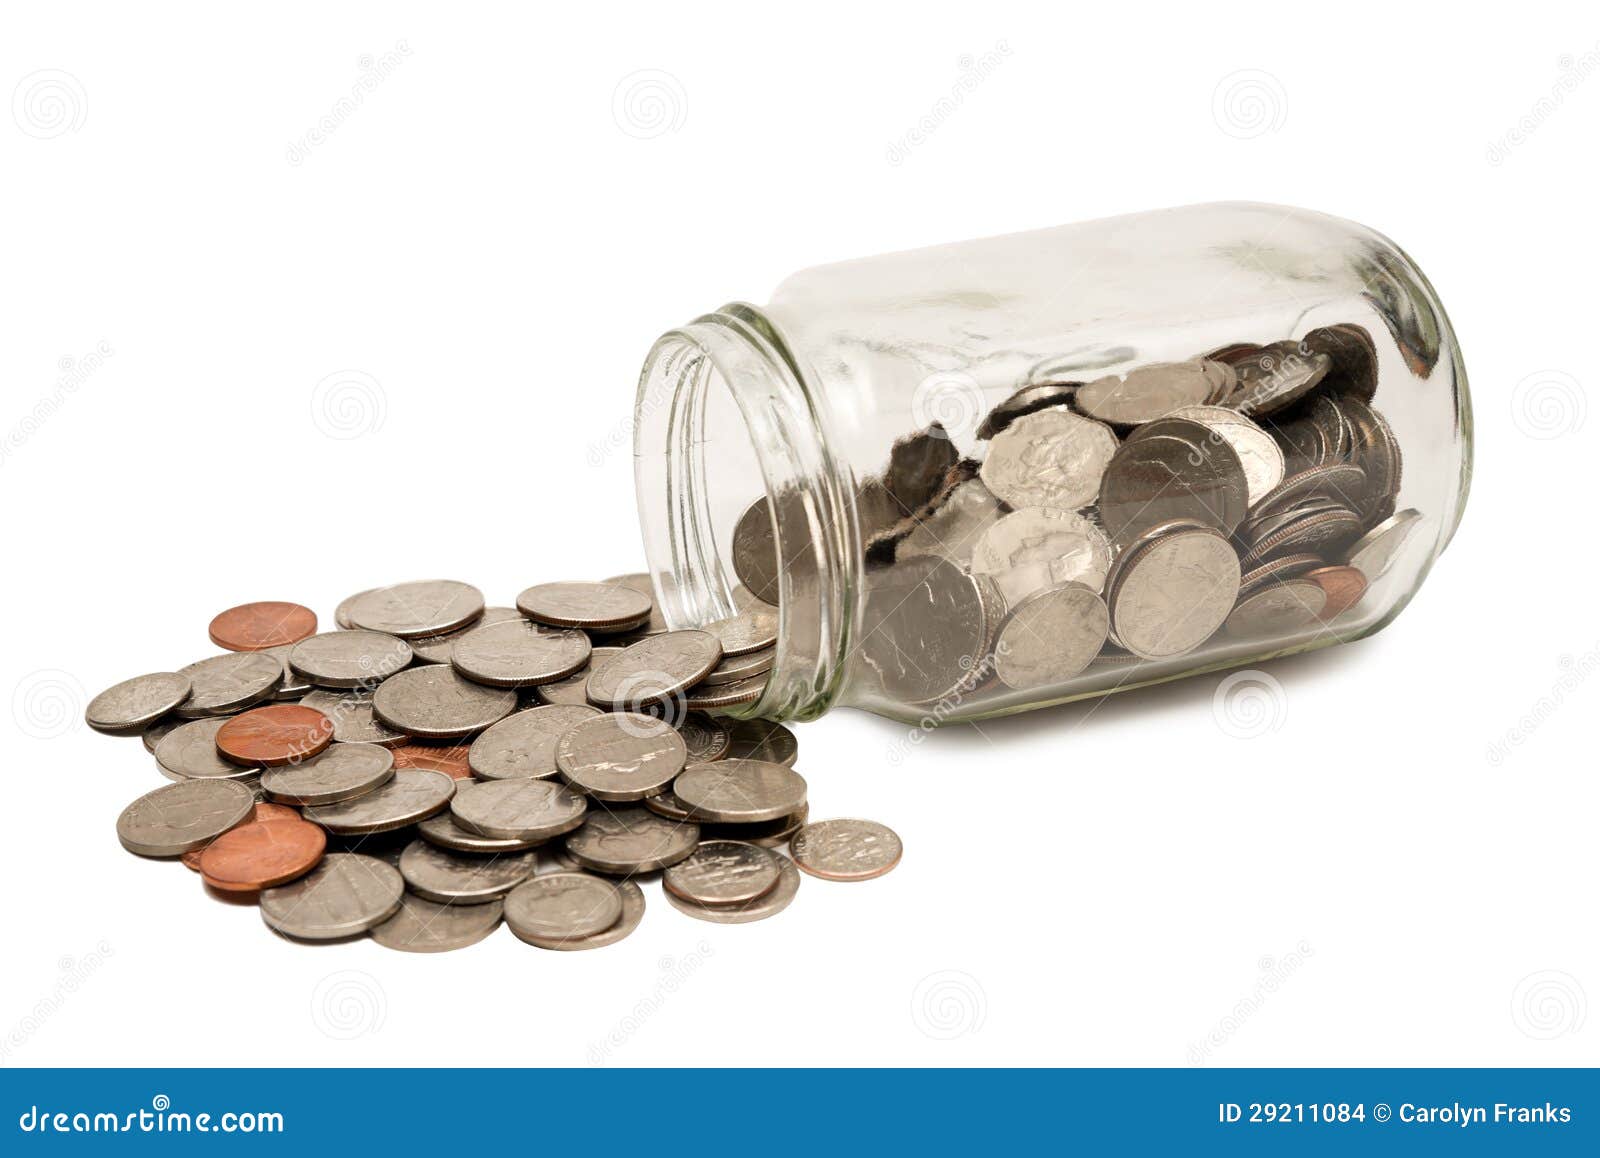 coins spilling out of jar xxxl 